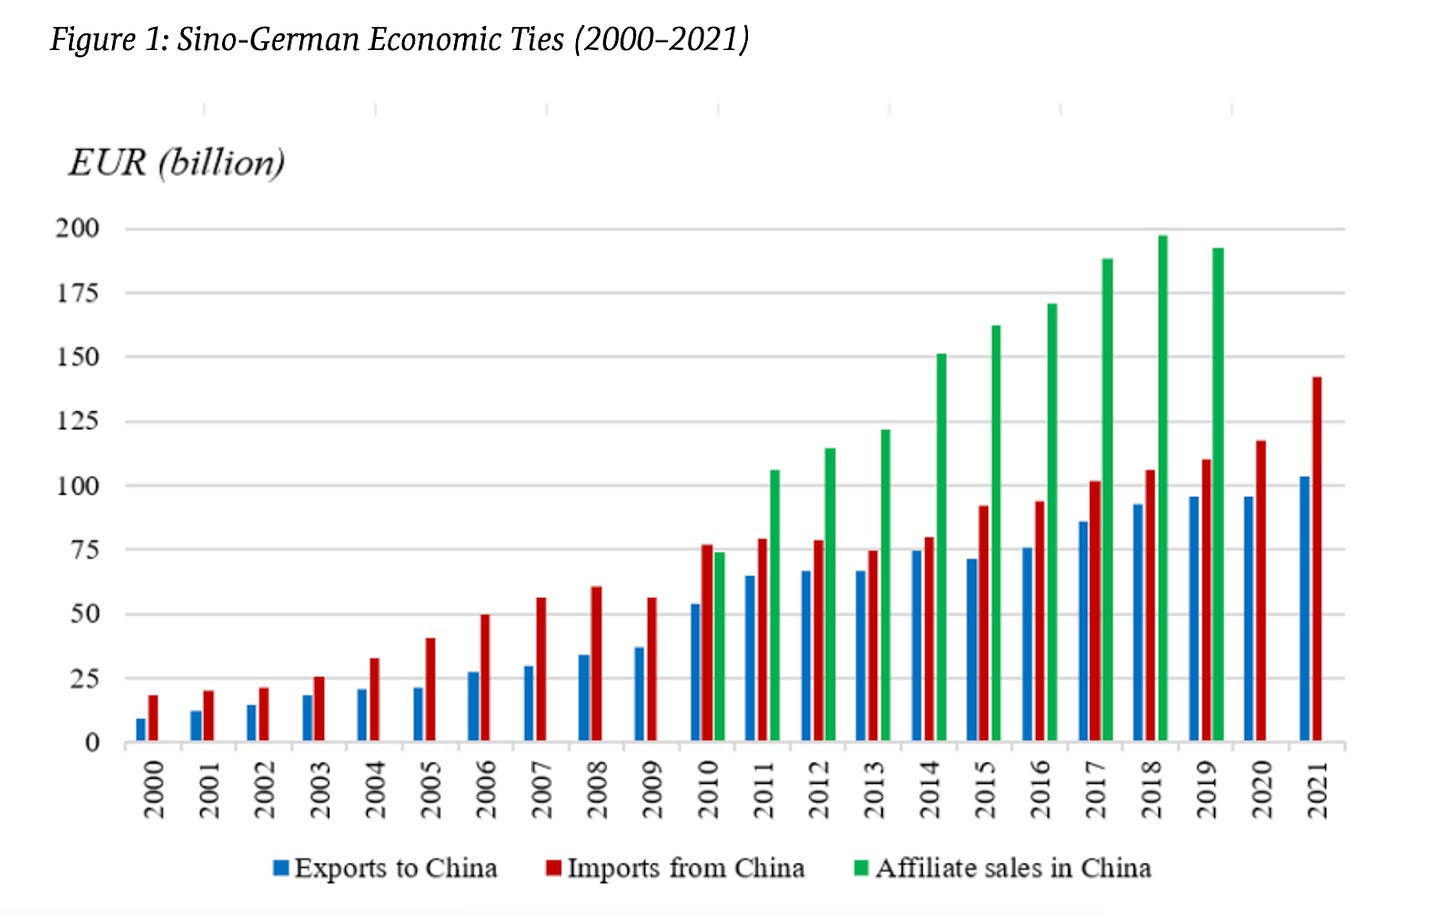 Graph of Sino-German economic ties from 2000-2021